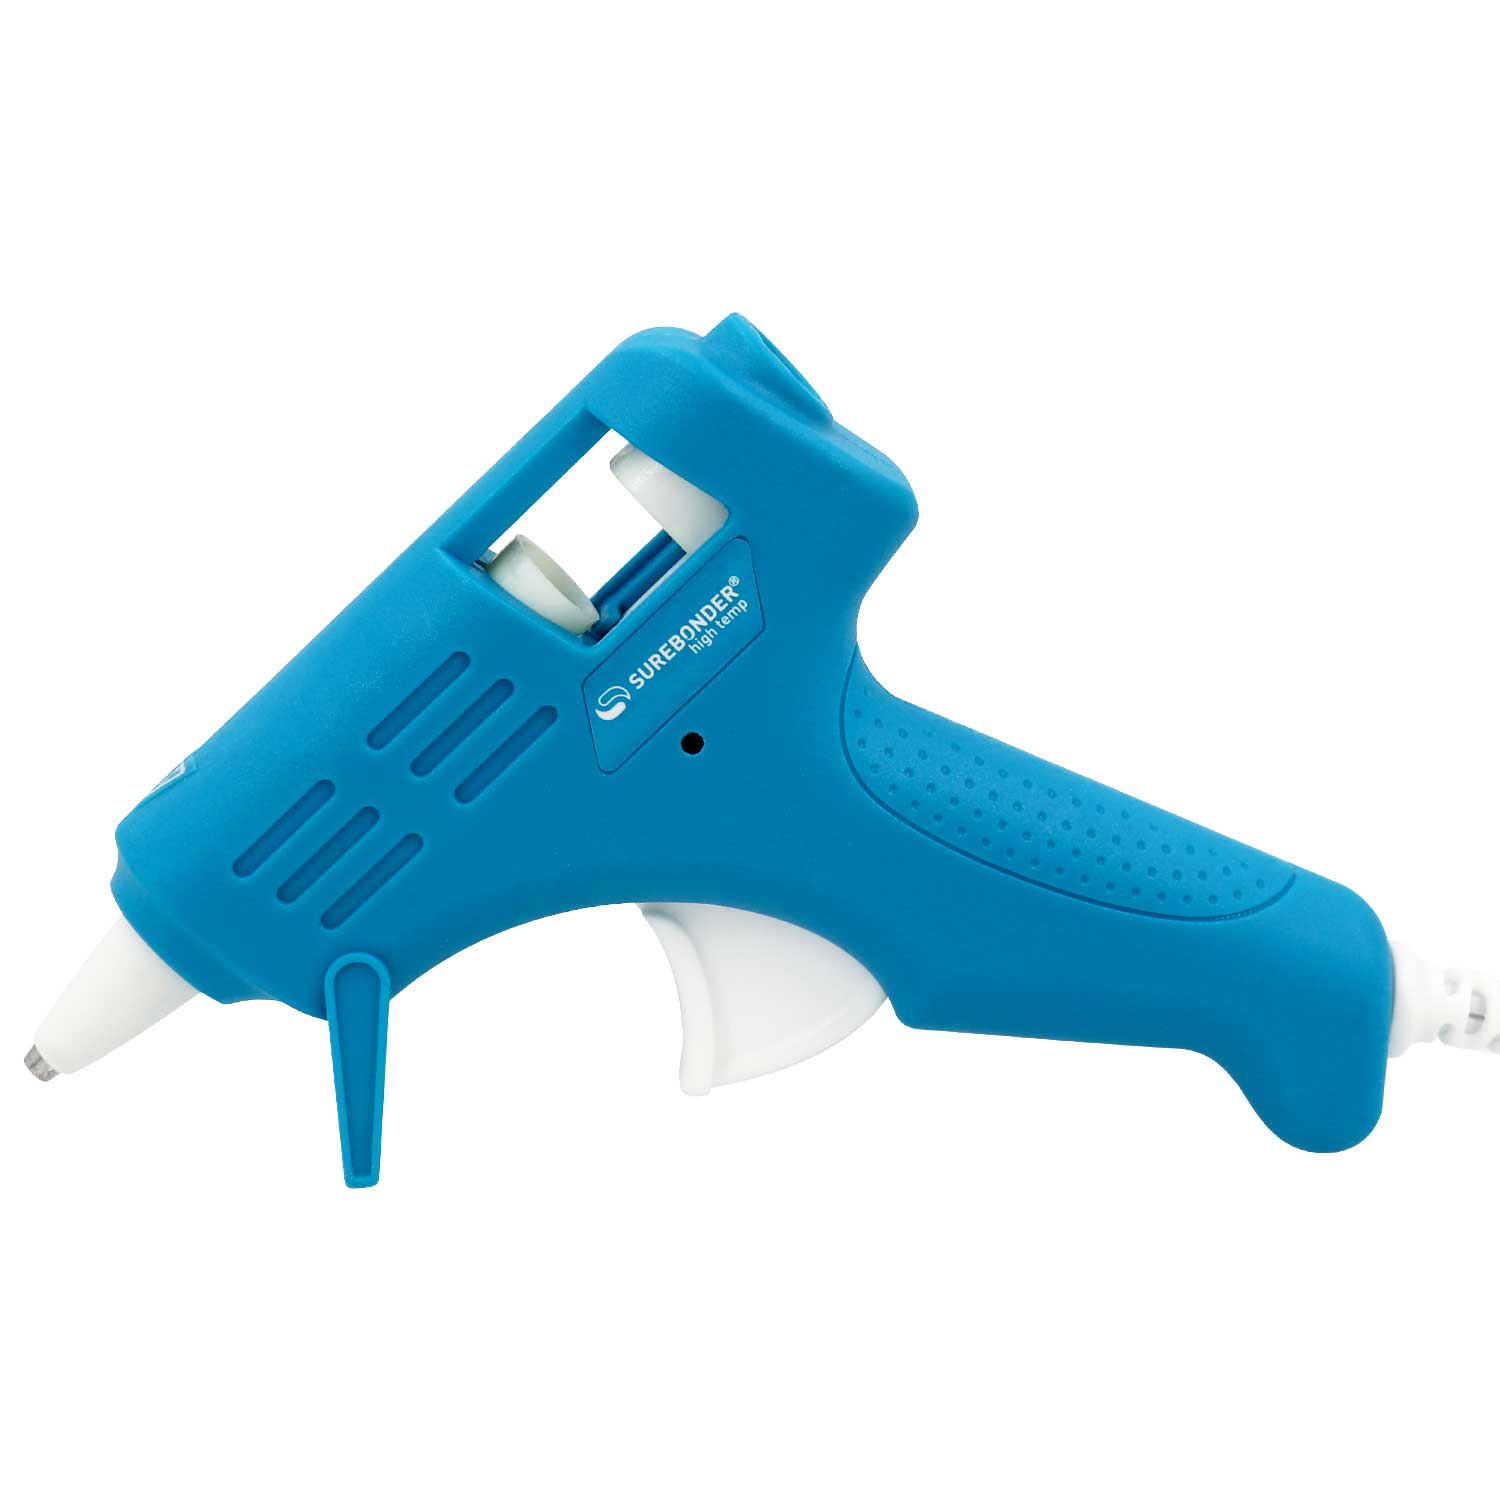 Surebonder Essentials Mini High Temp Glue Gun - Ocean